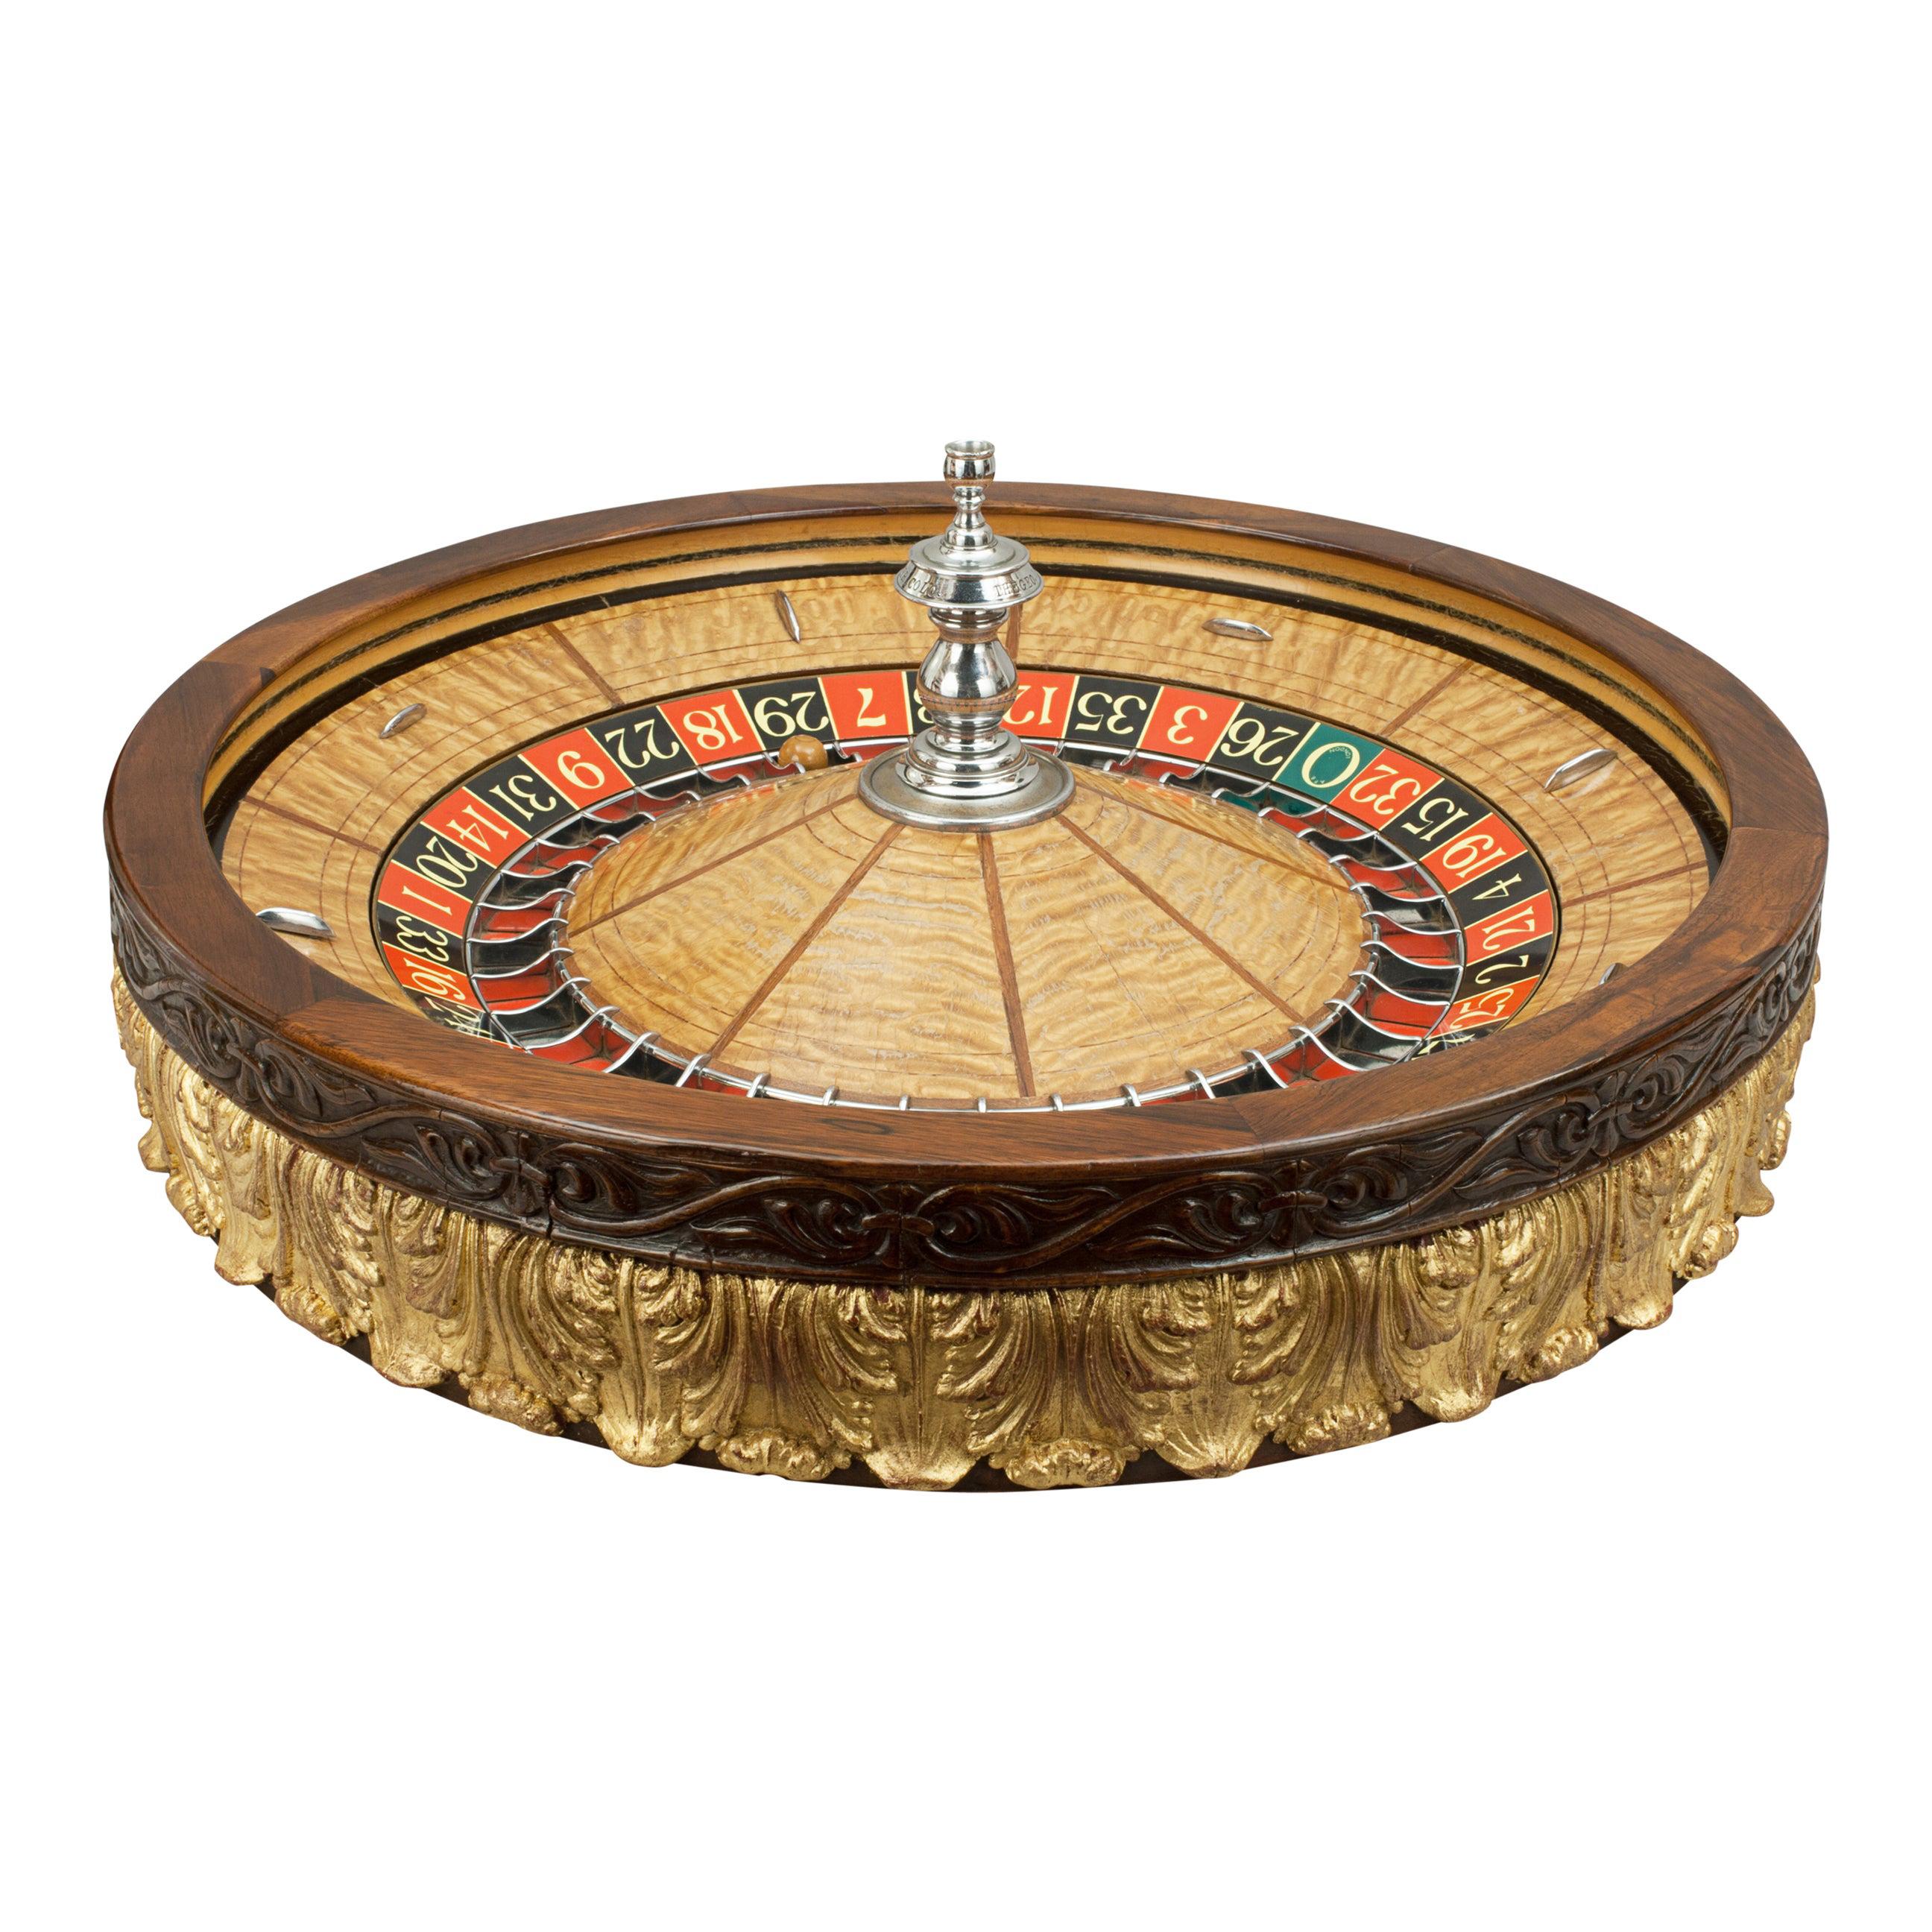 Antique Casino Roulette Wheel, George Mason Co. Denver Colorado